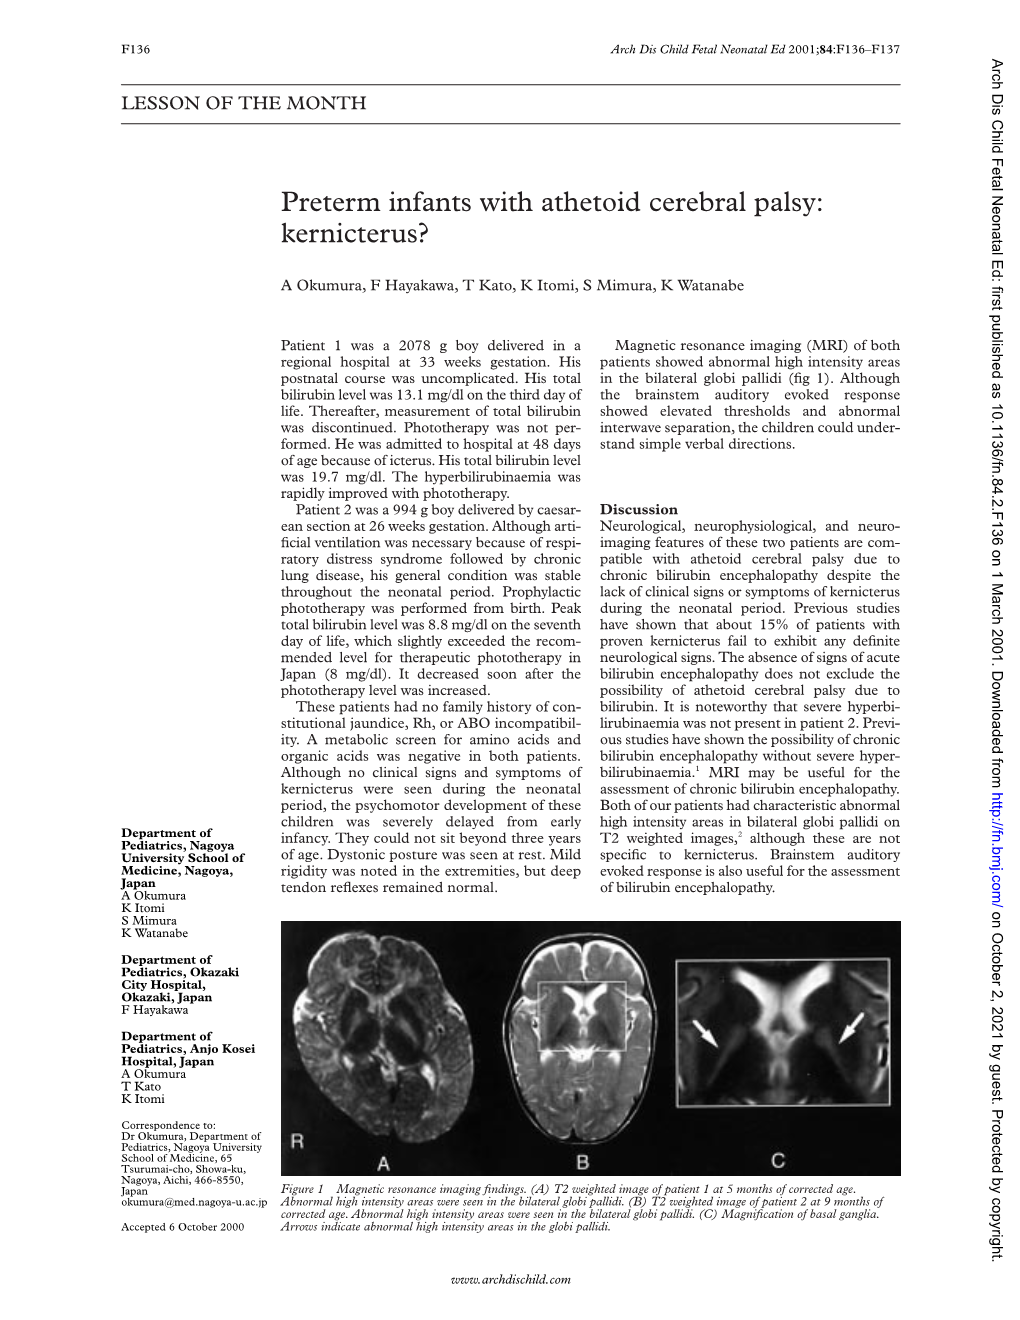 Preterm Infants with Athetoid Cerebral Palsy: Kernicterus?